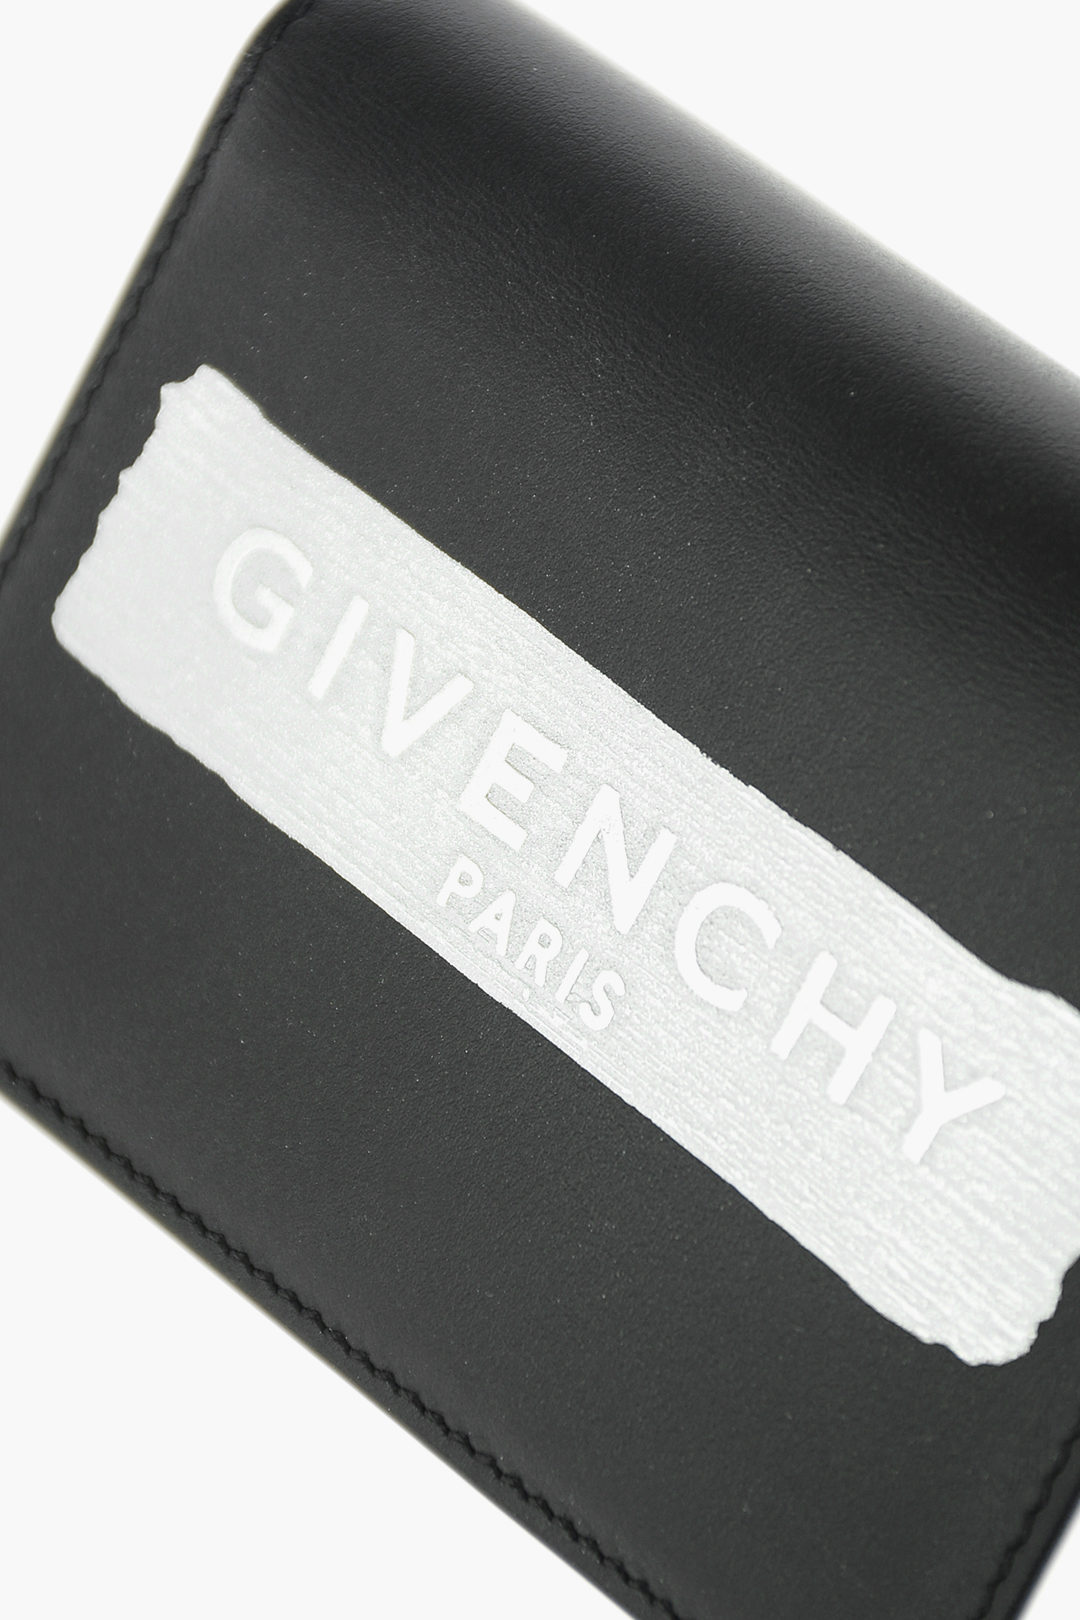 Givenchy leather card holder men - Glamood Outlet